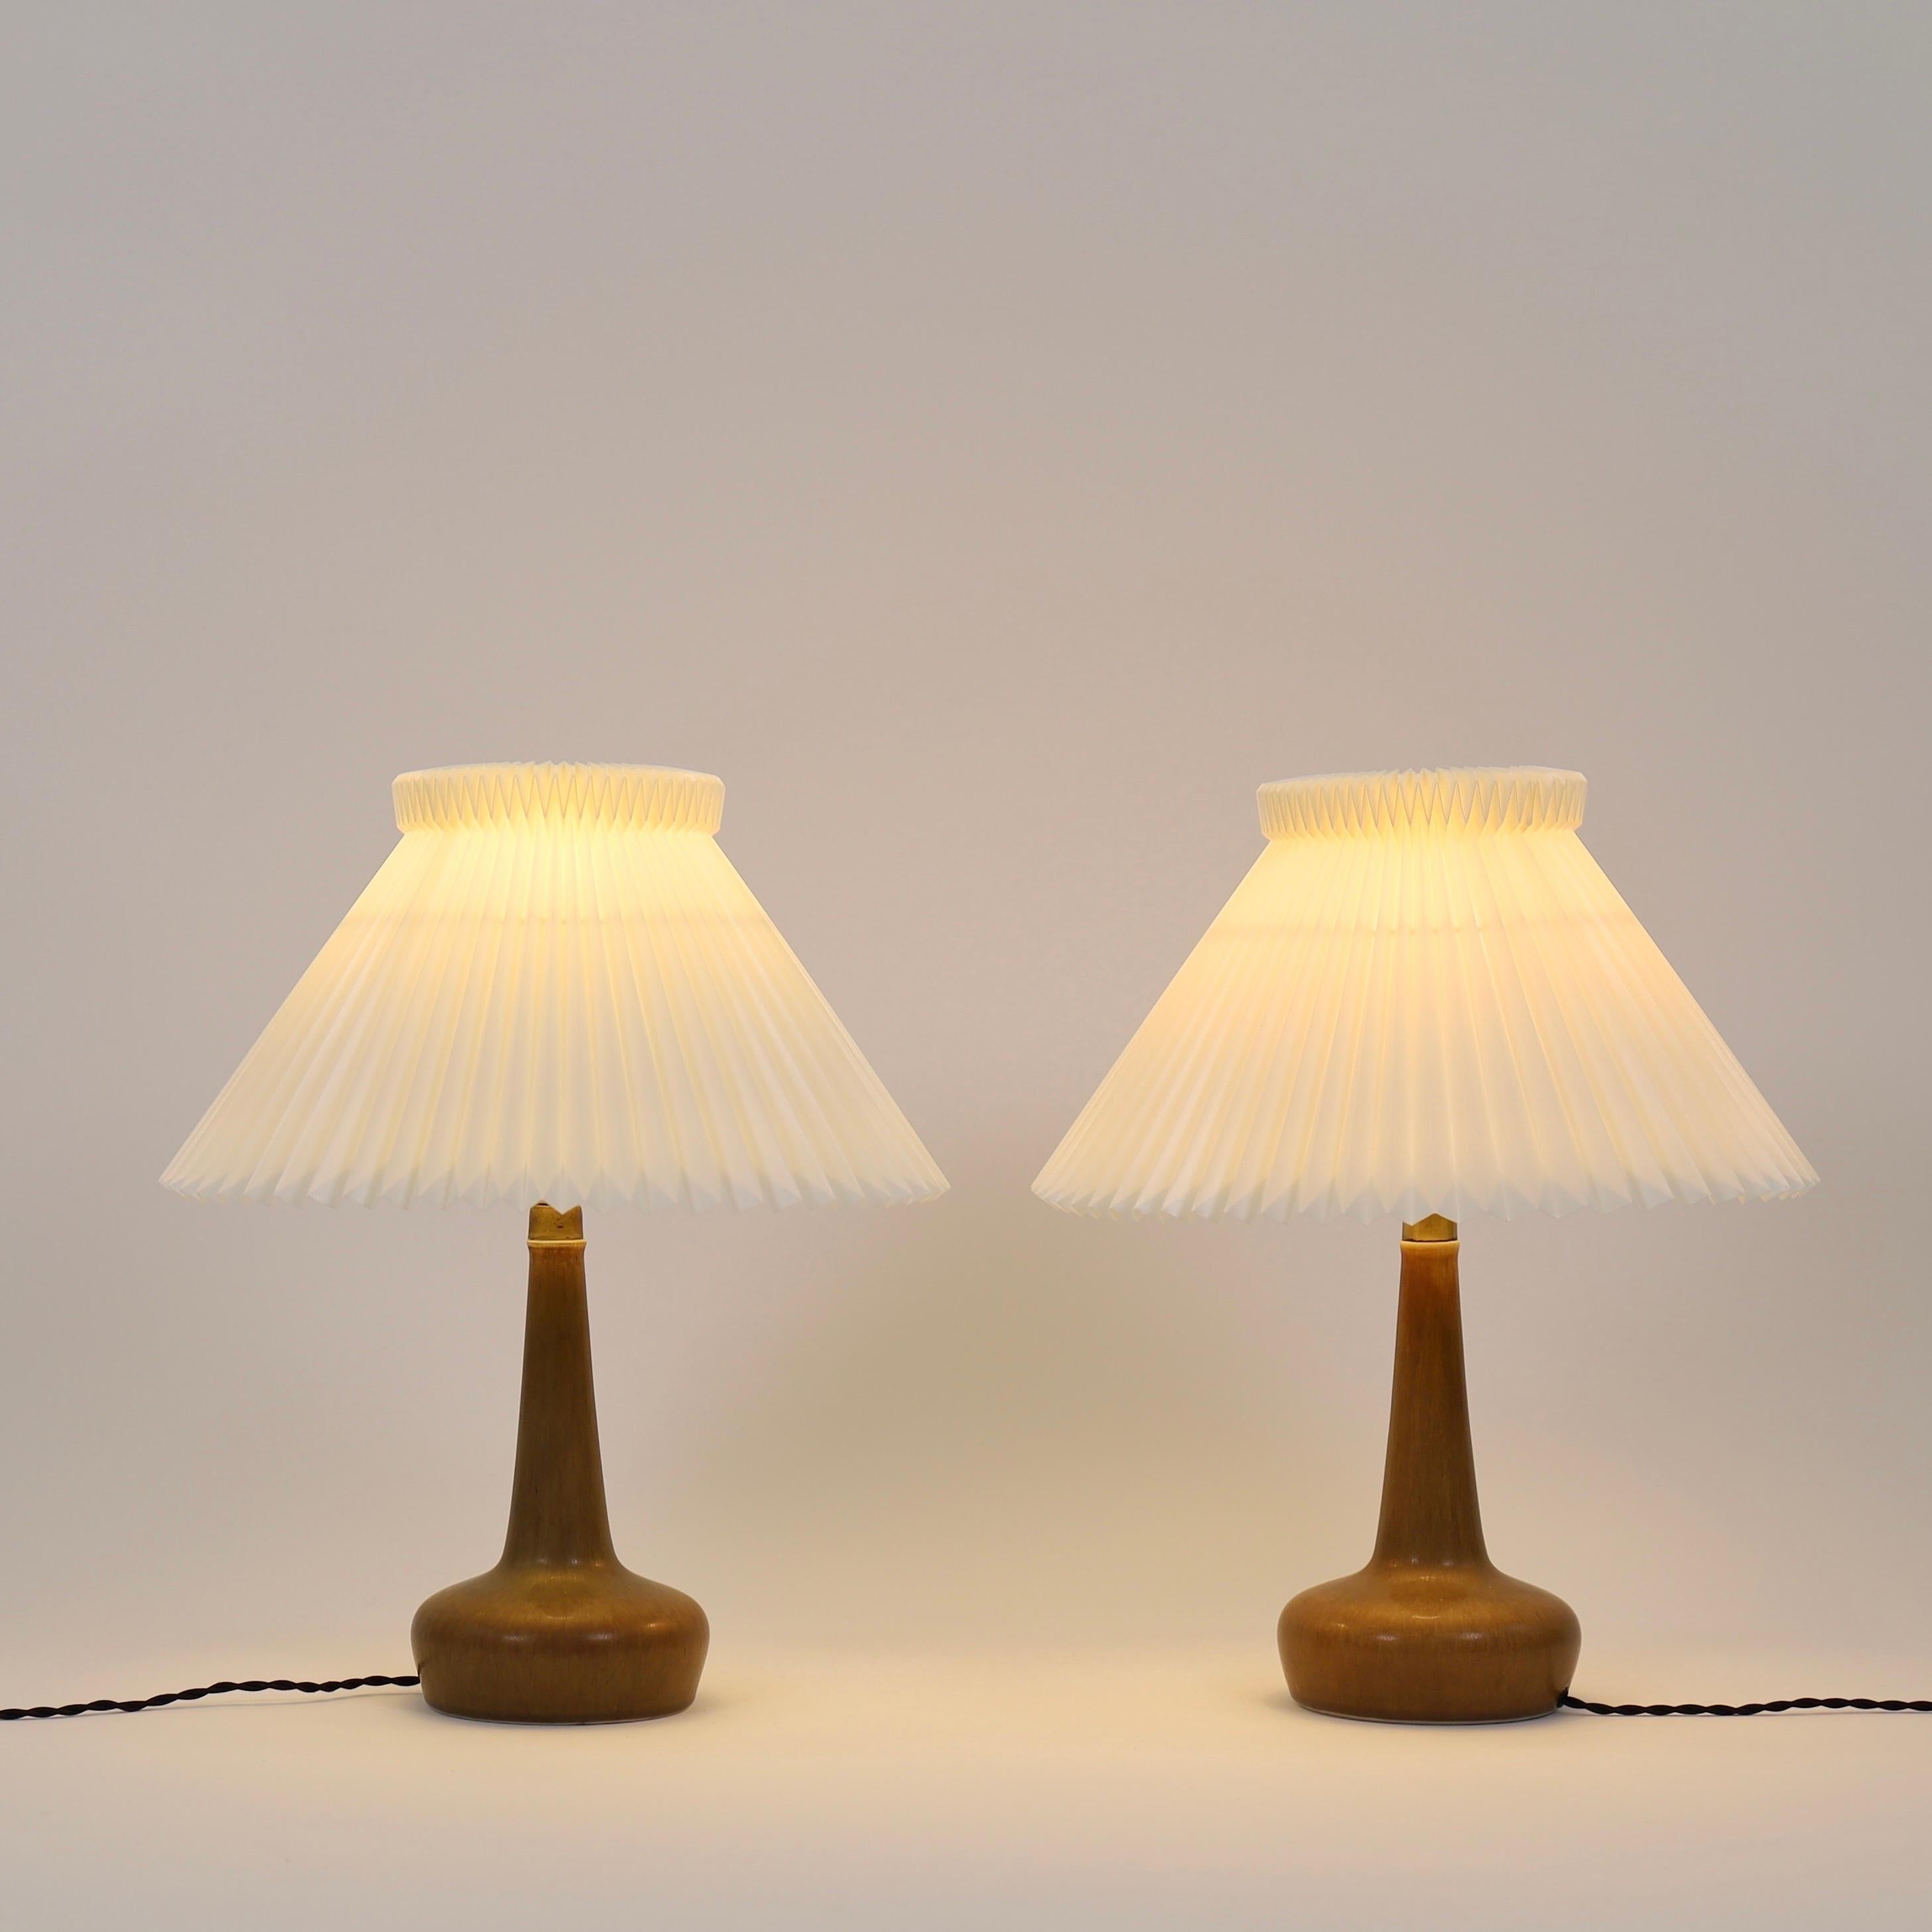 Set of Ceramic Table Lamps by Esben Klint for Le Klint, 1950s, Denmark For Sale 8